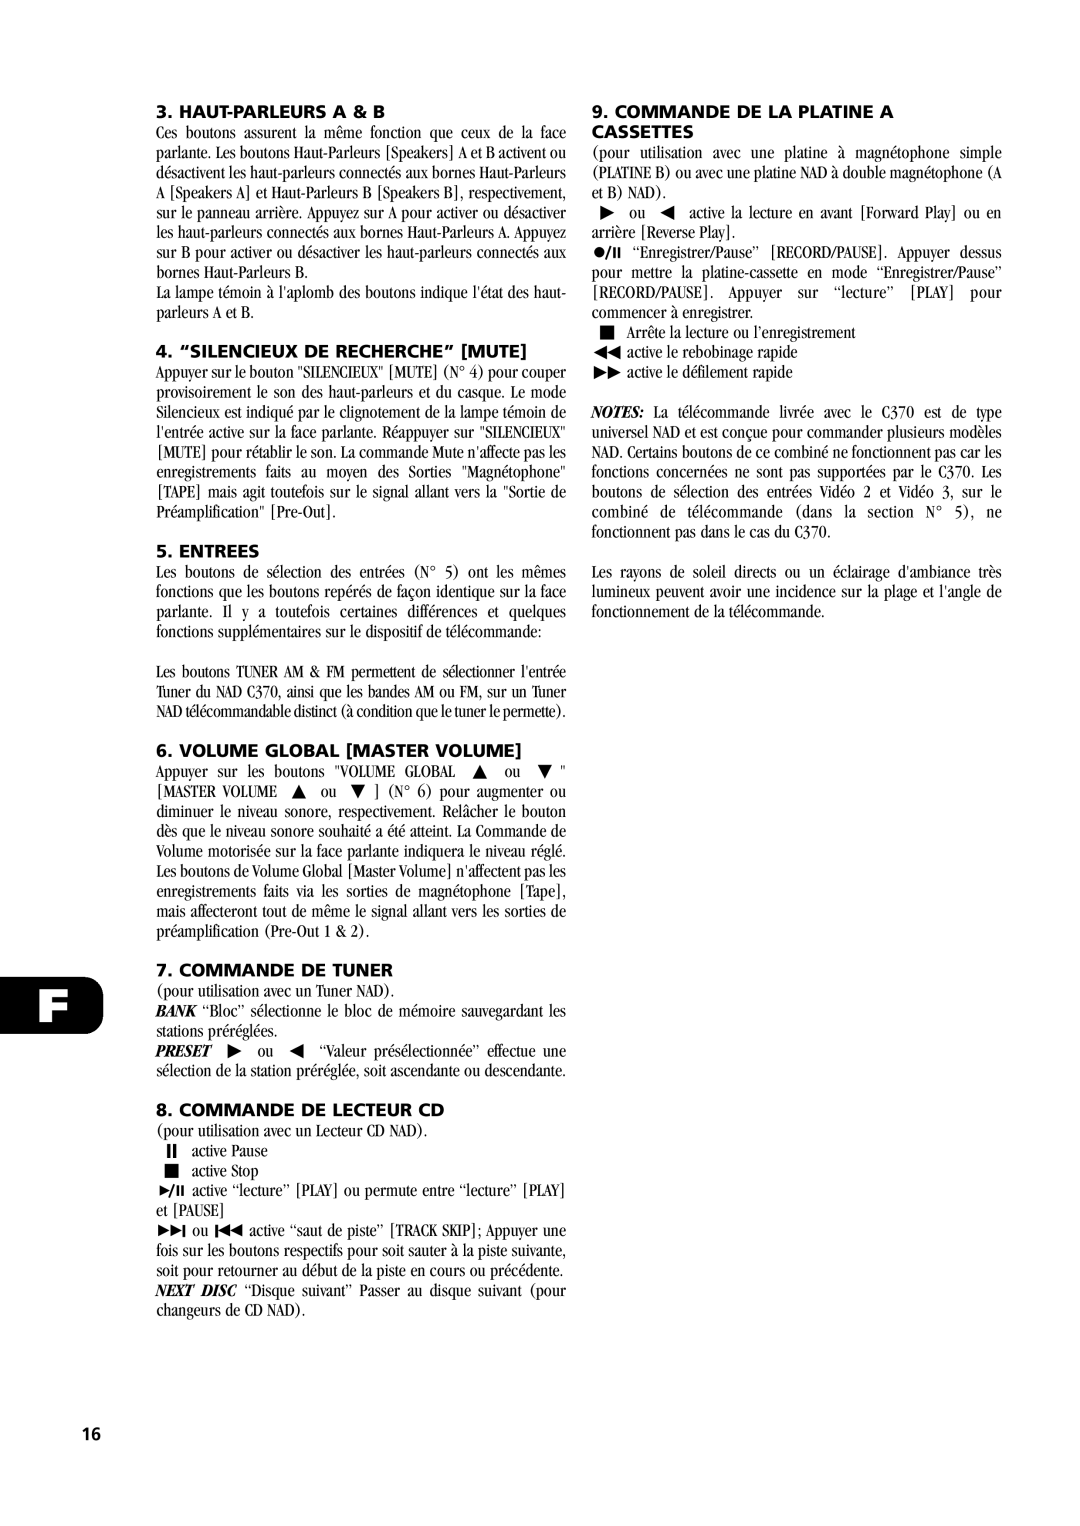 NAD C370 Haut-Parleursa & B, 4.“SILENCIEUX DE RECHERCHE” MUTE, Entrees, Volume Global Master Volume, Commande De Tuner 